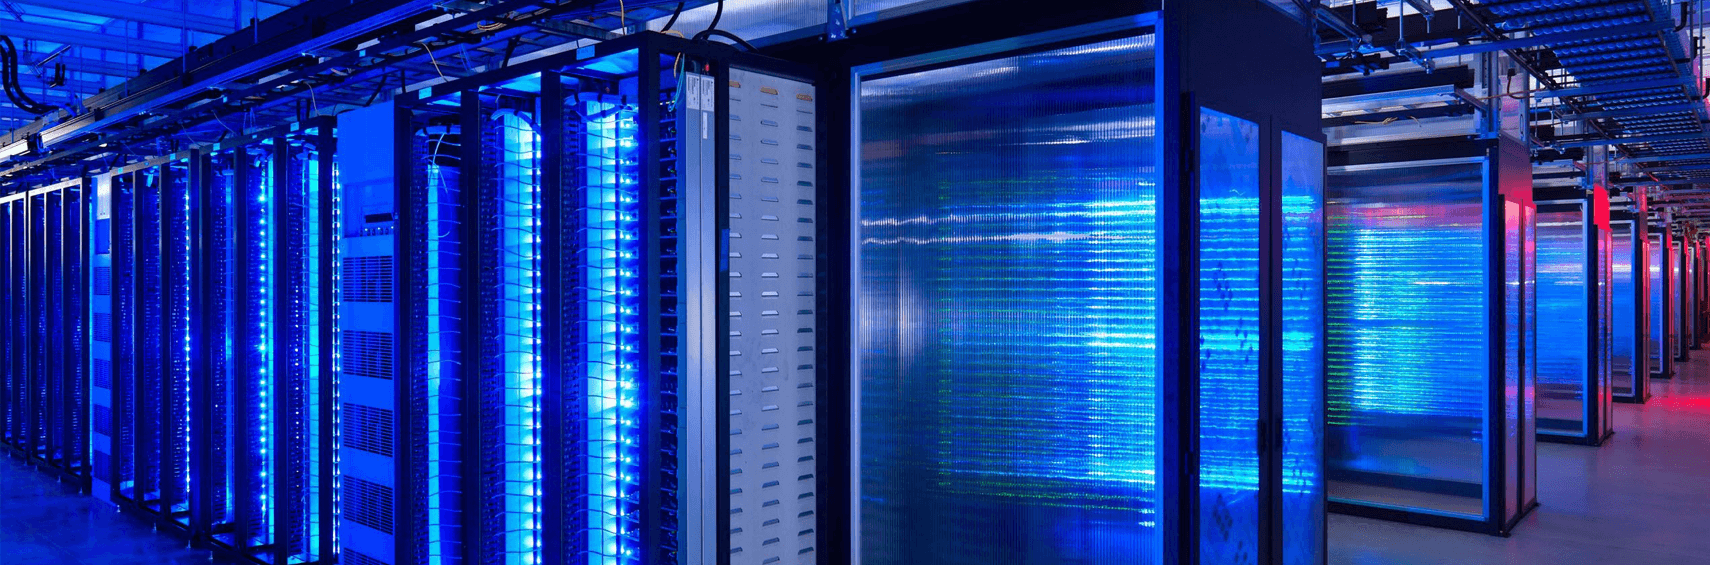 Intelligent Policy Server storage system